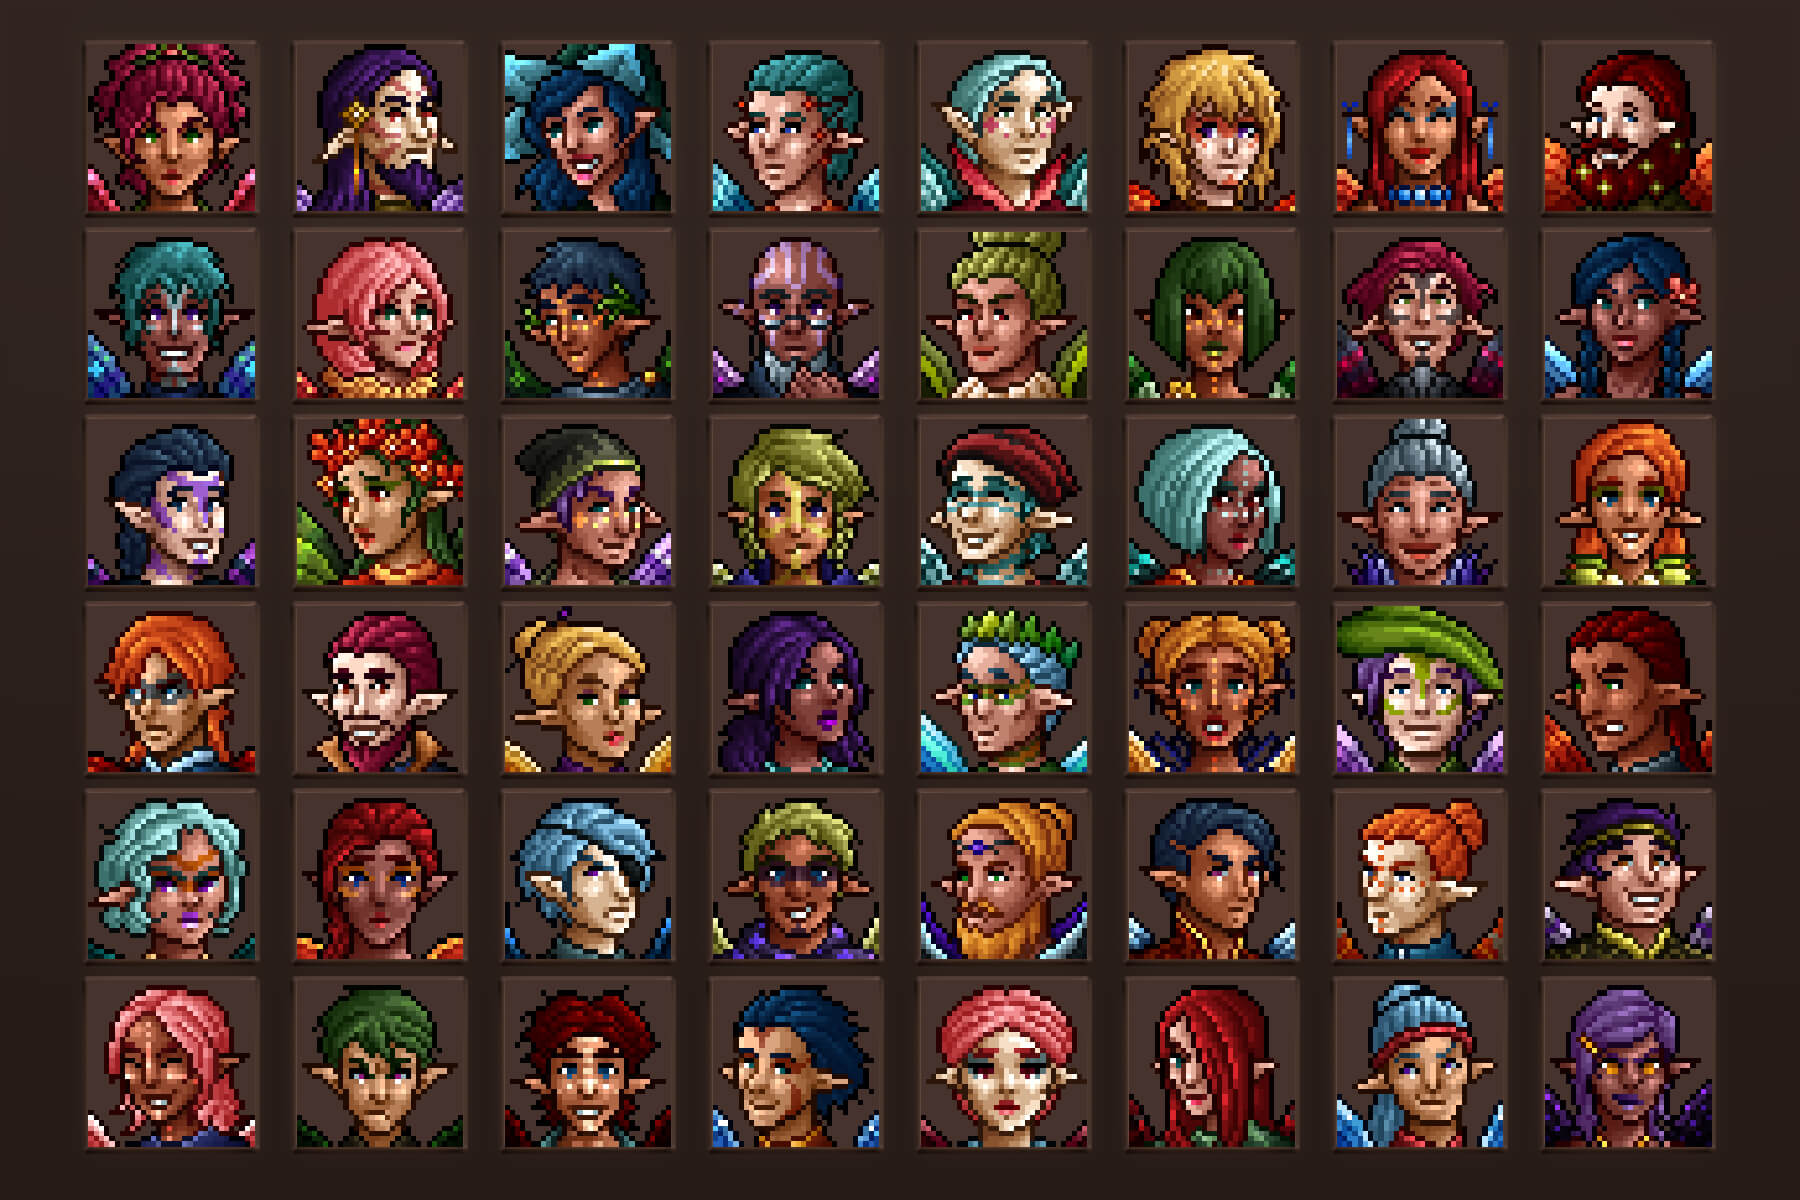 Free Fairy Avatar Icons 32x32 Pixel Art 